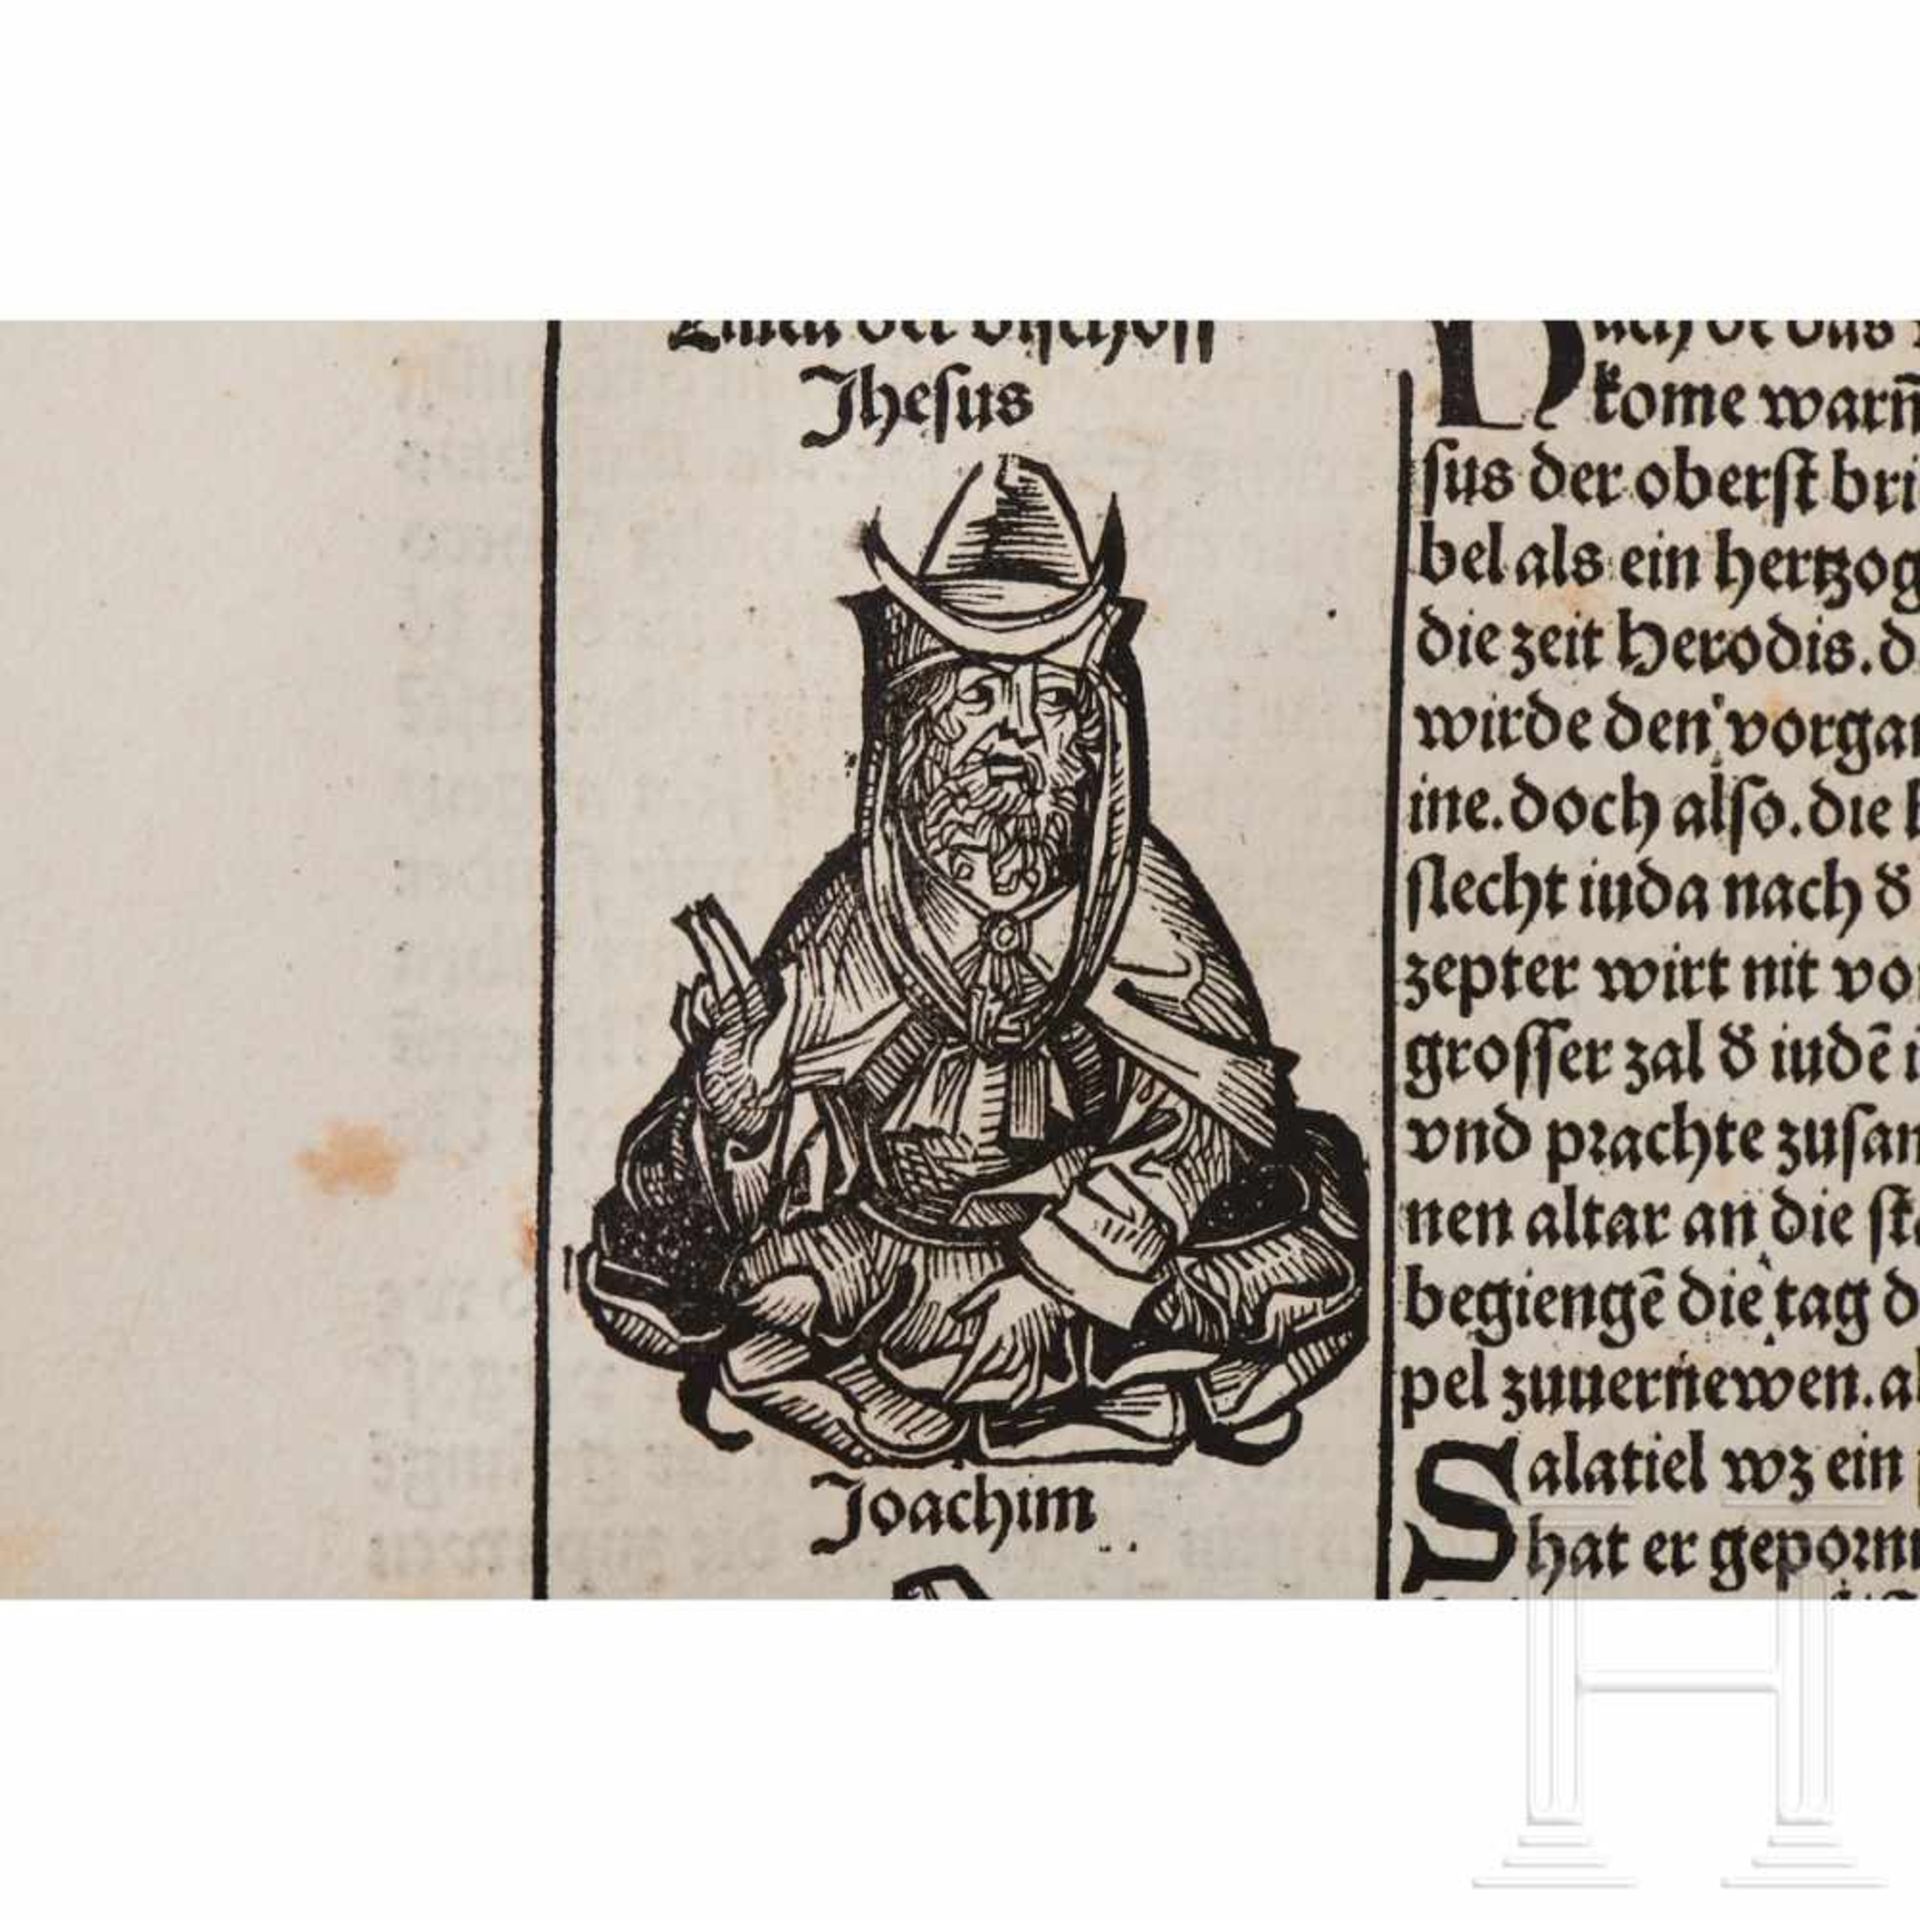 Hartmann Schedel, Das Buch der Chroniken, Nürnberg, A. Koberger, 1493 - Image 49 of 51